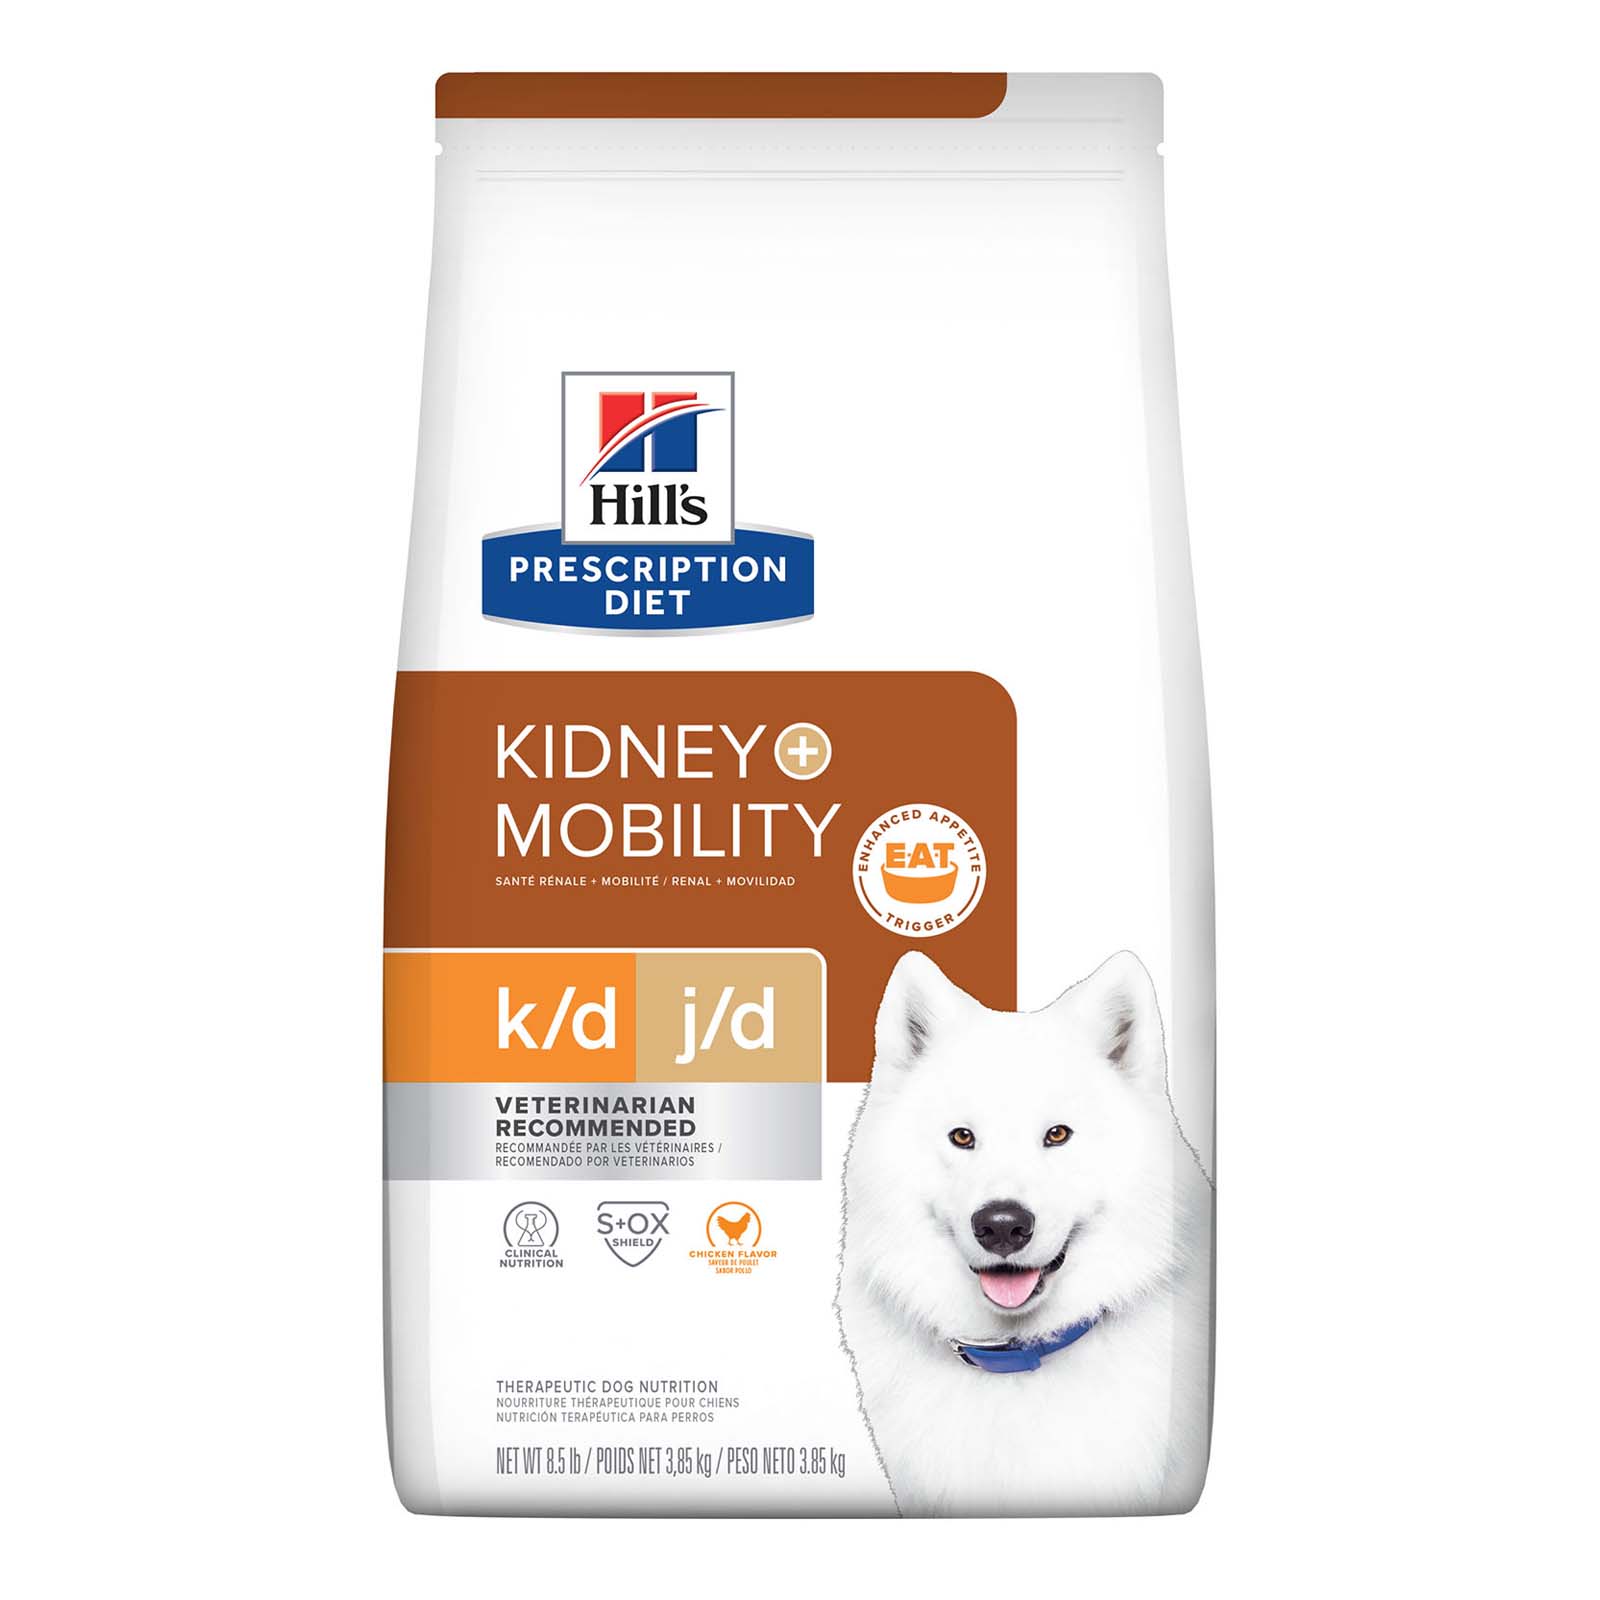 Hill's Prescription Diet k/d + Mobility Dry Dog Food